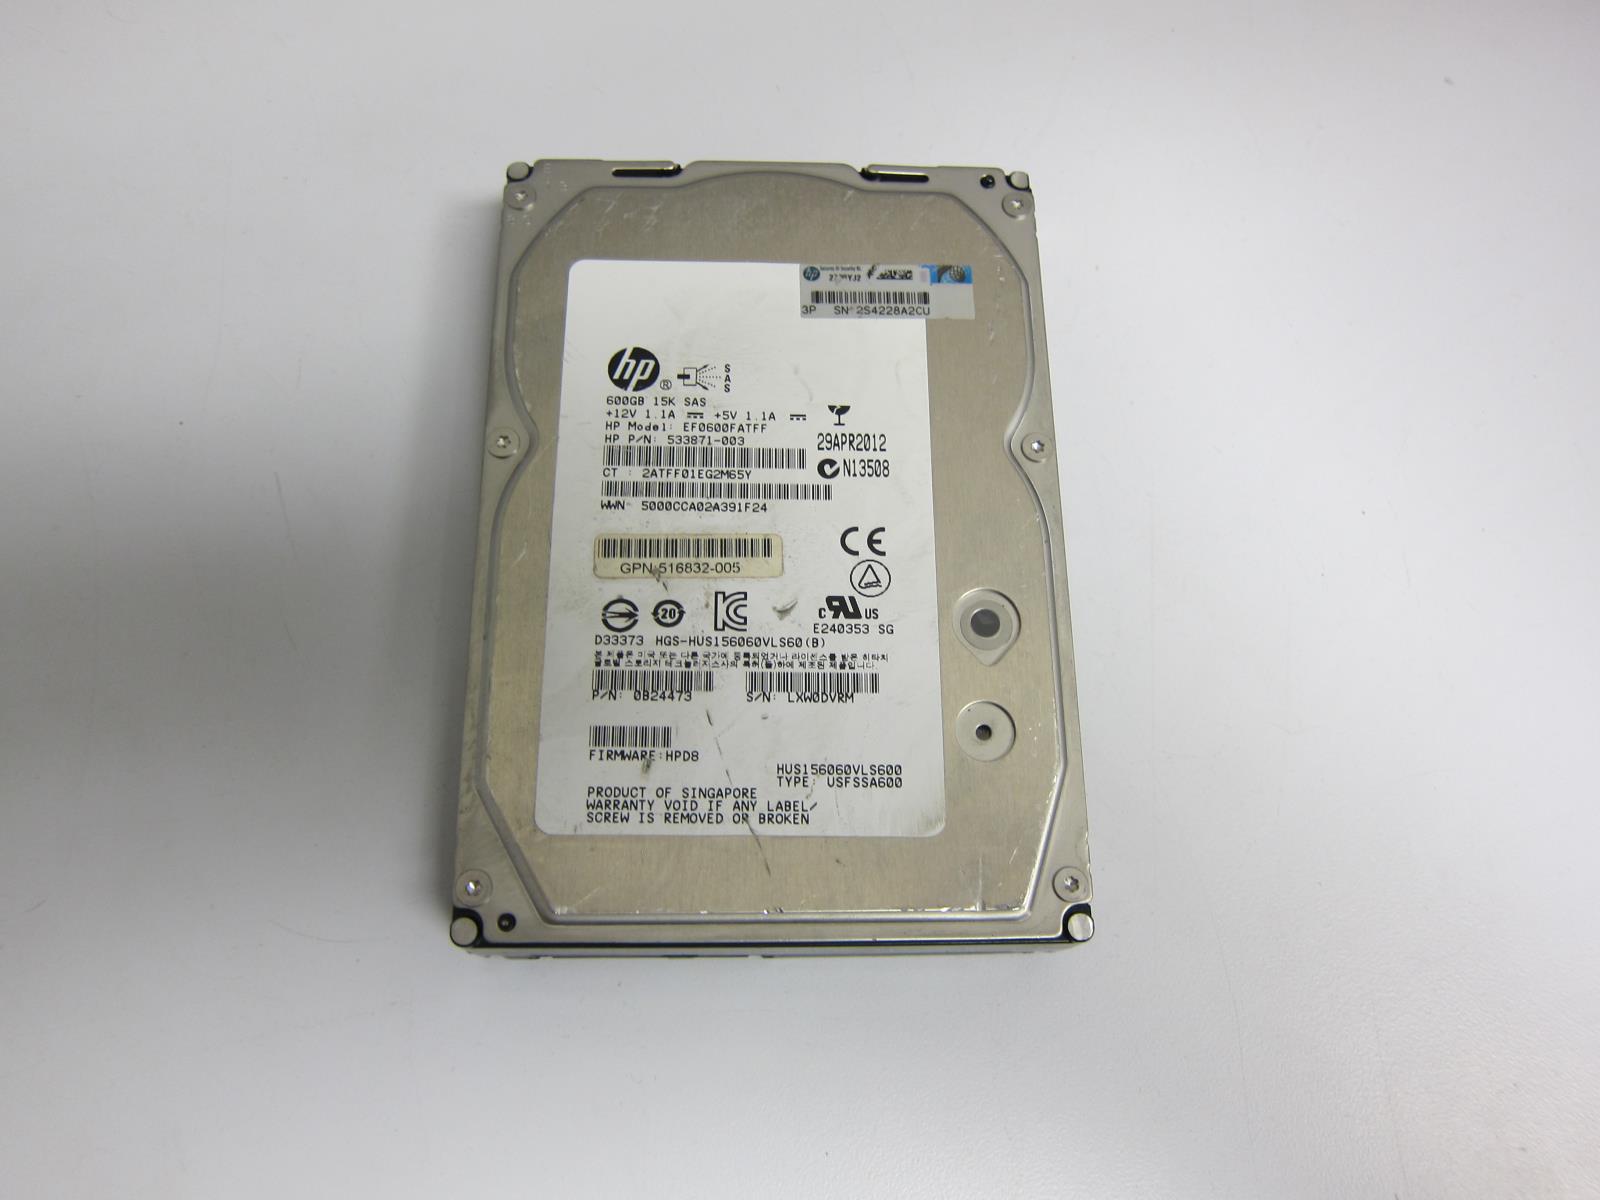 Dell Server HDD HITACHI 3.5" 600GB SAS 15K HUS156060VLS600 With New Tray